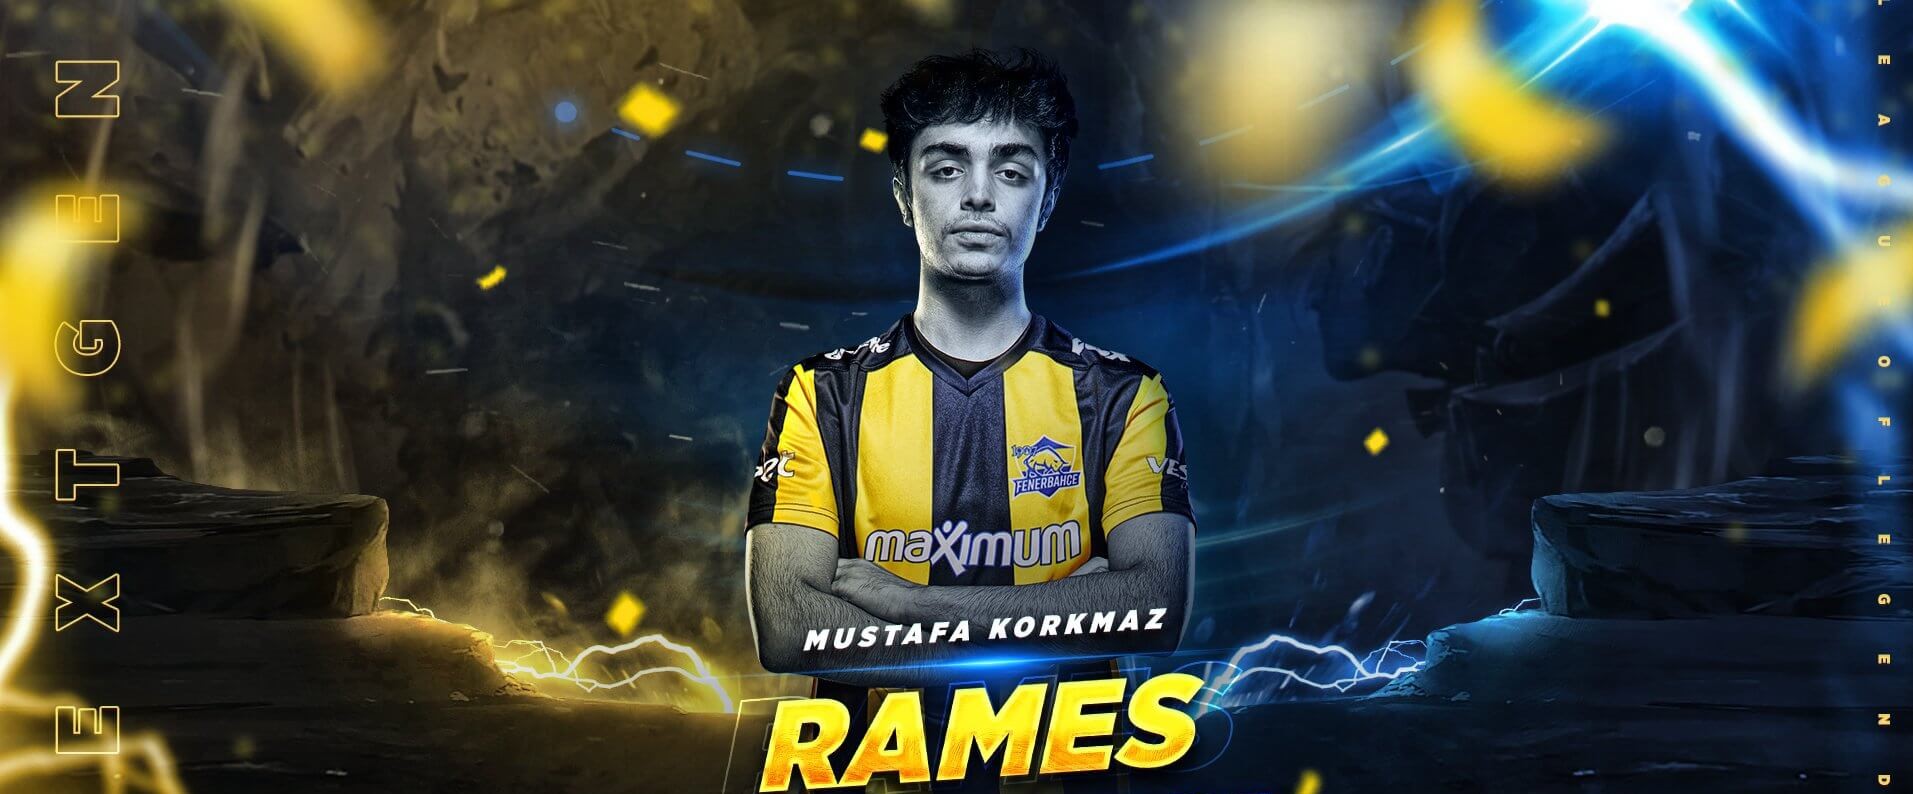 Rames